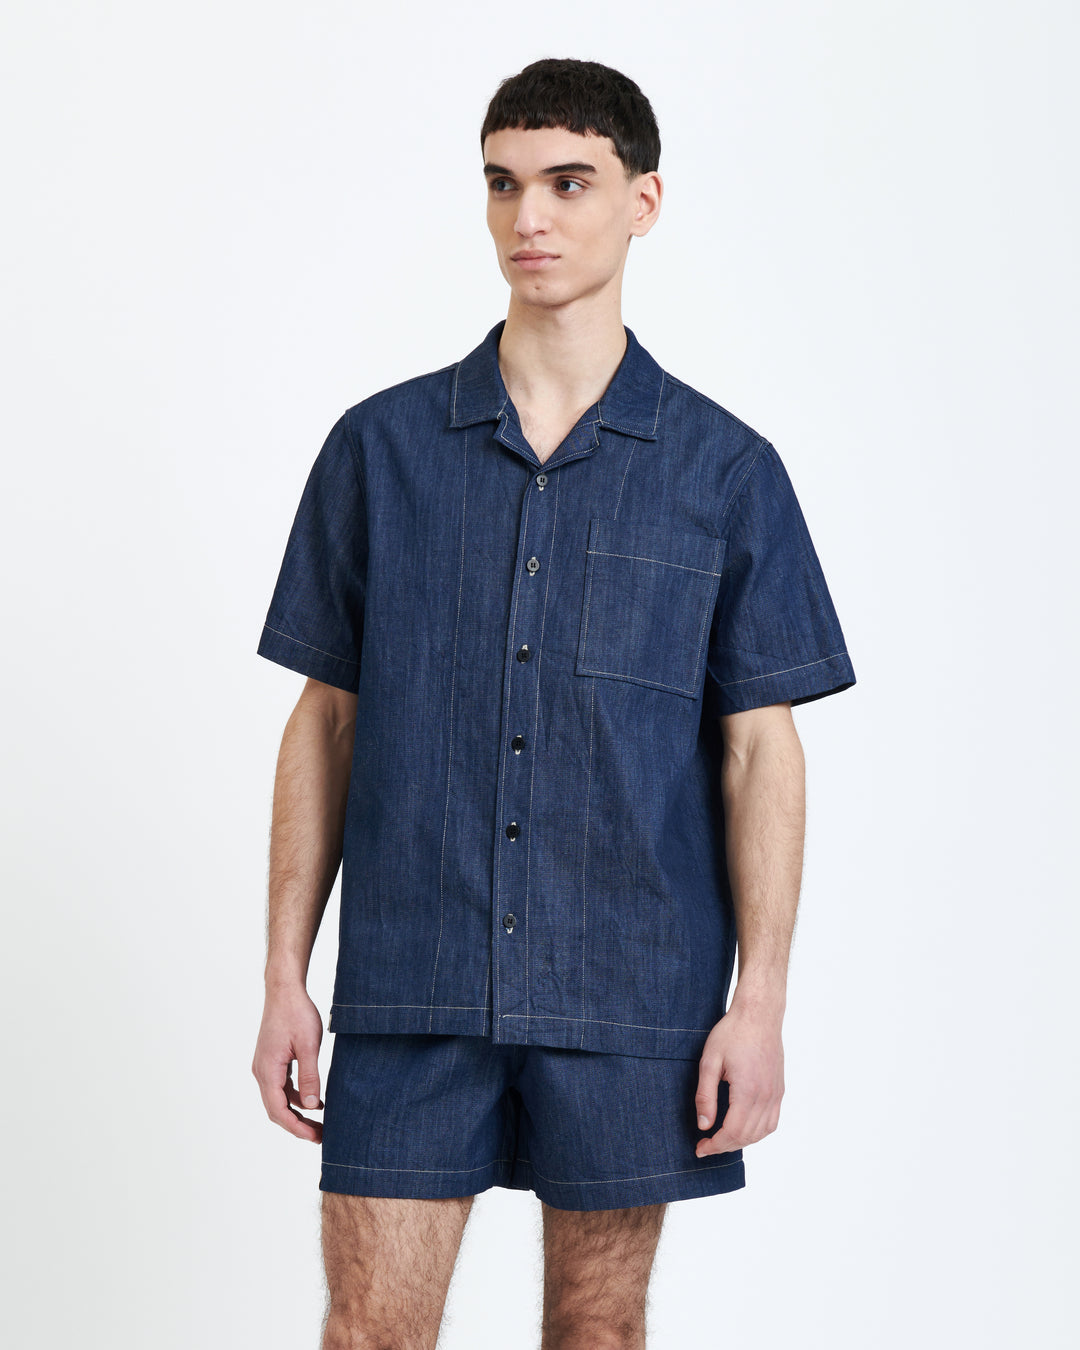 New Optimist menswear Calla | Summer denim island shirt Blouse